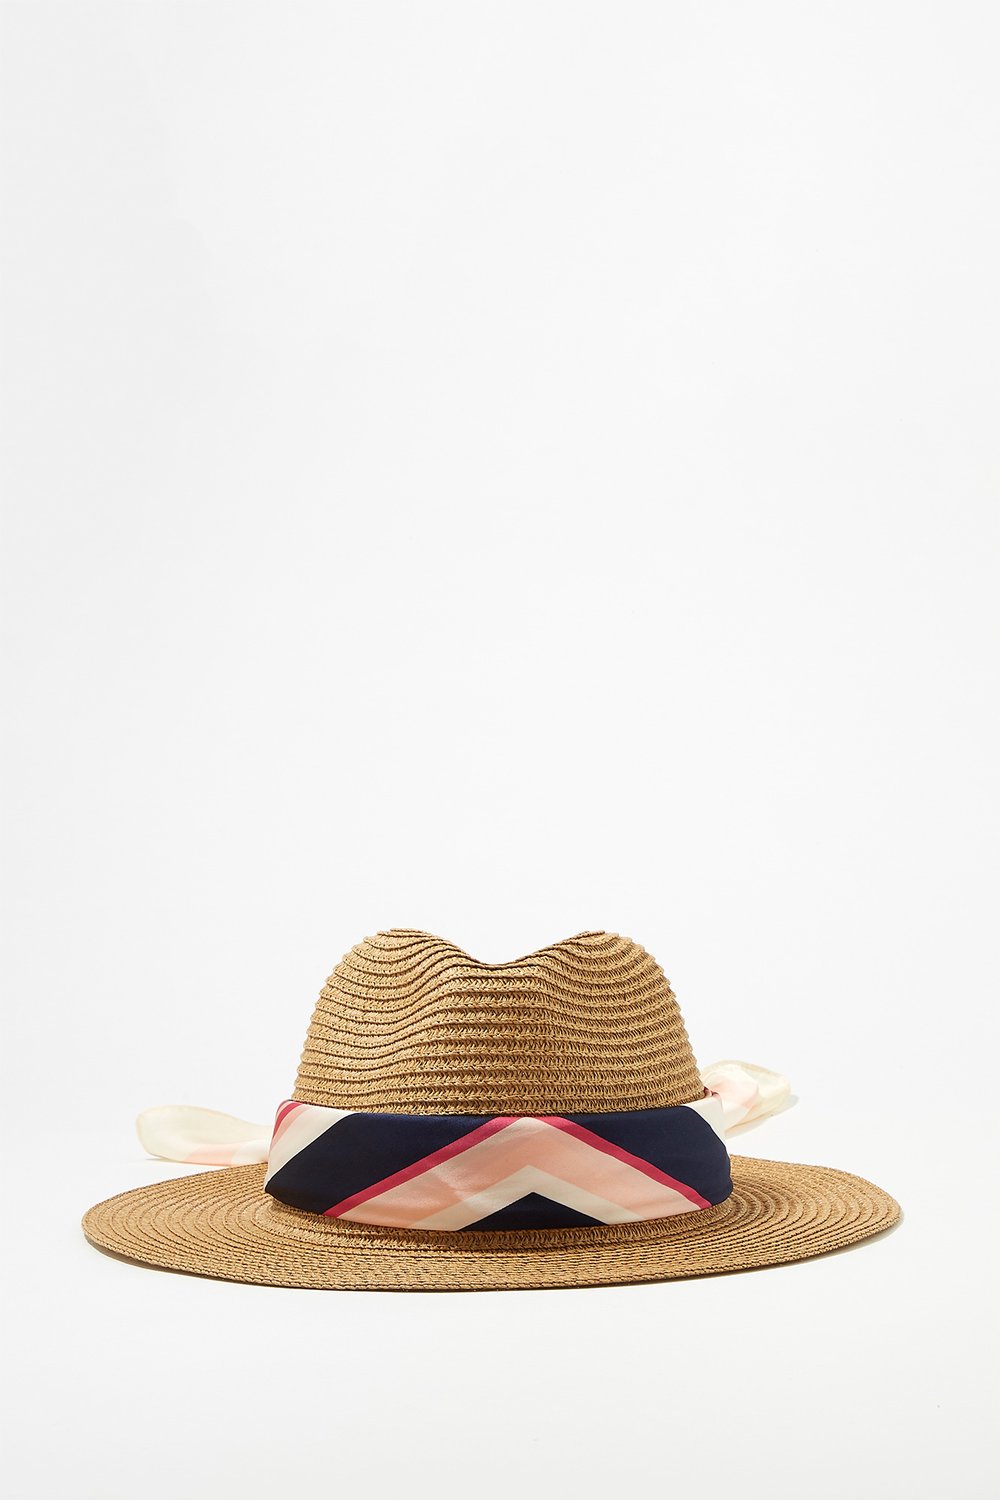 ribbon straw hat